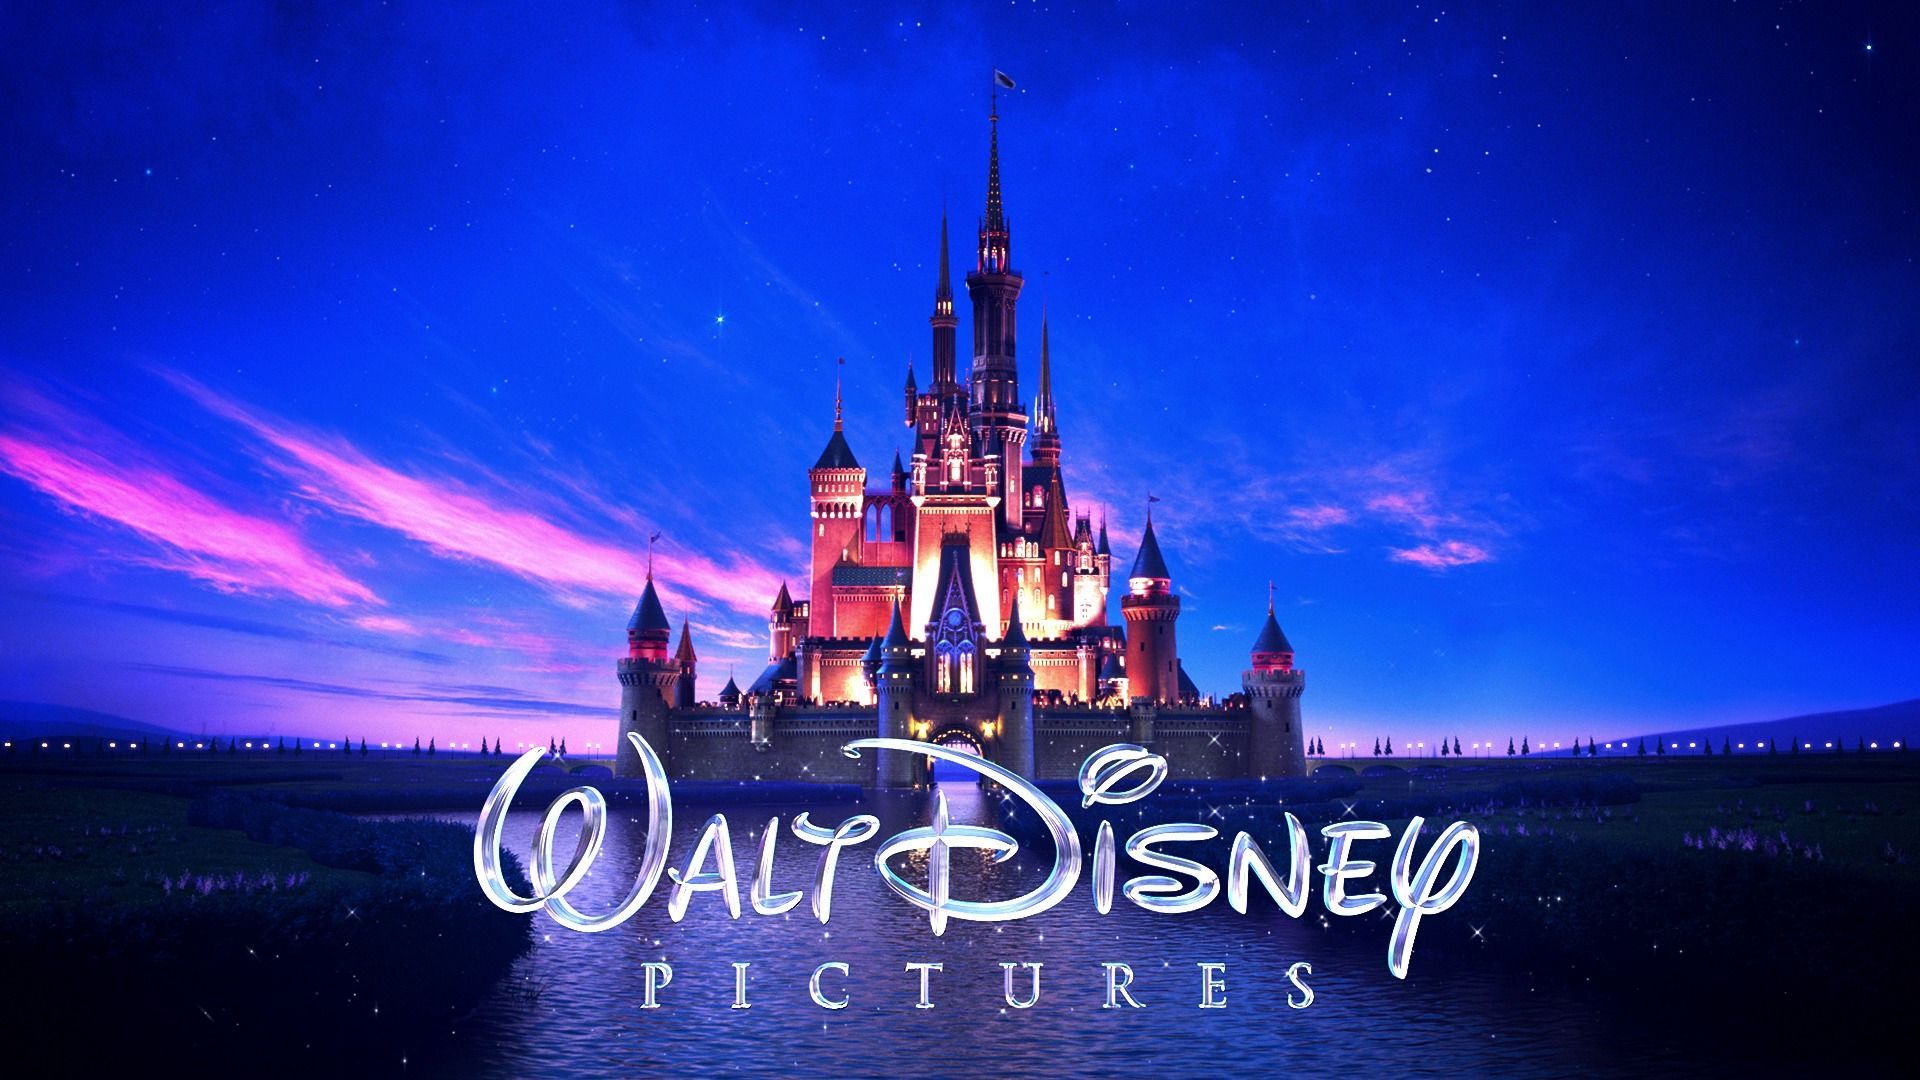 Disney World Desktop Wallpaper